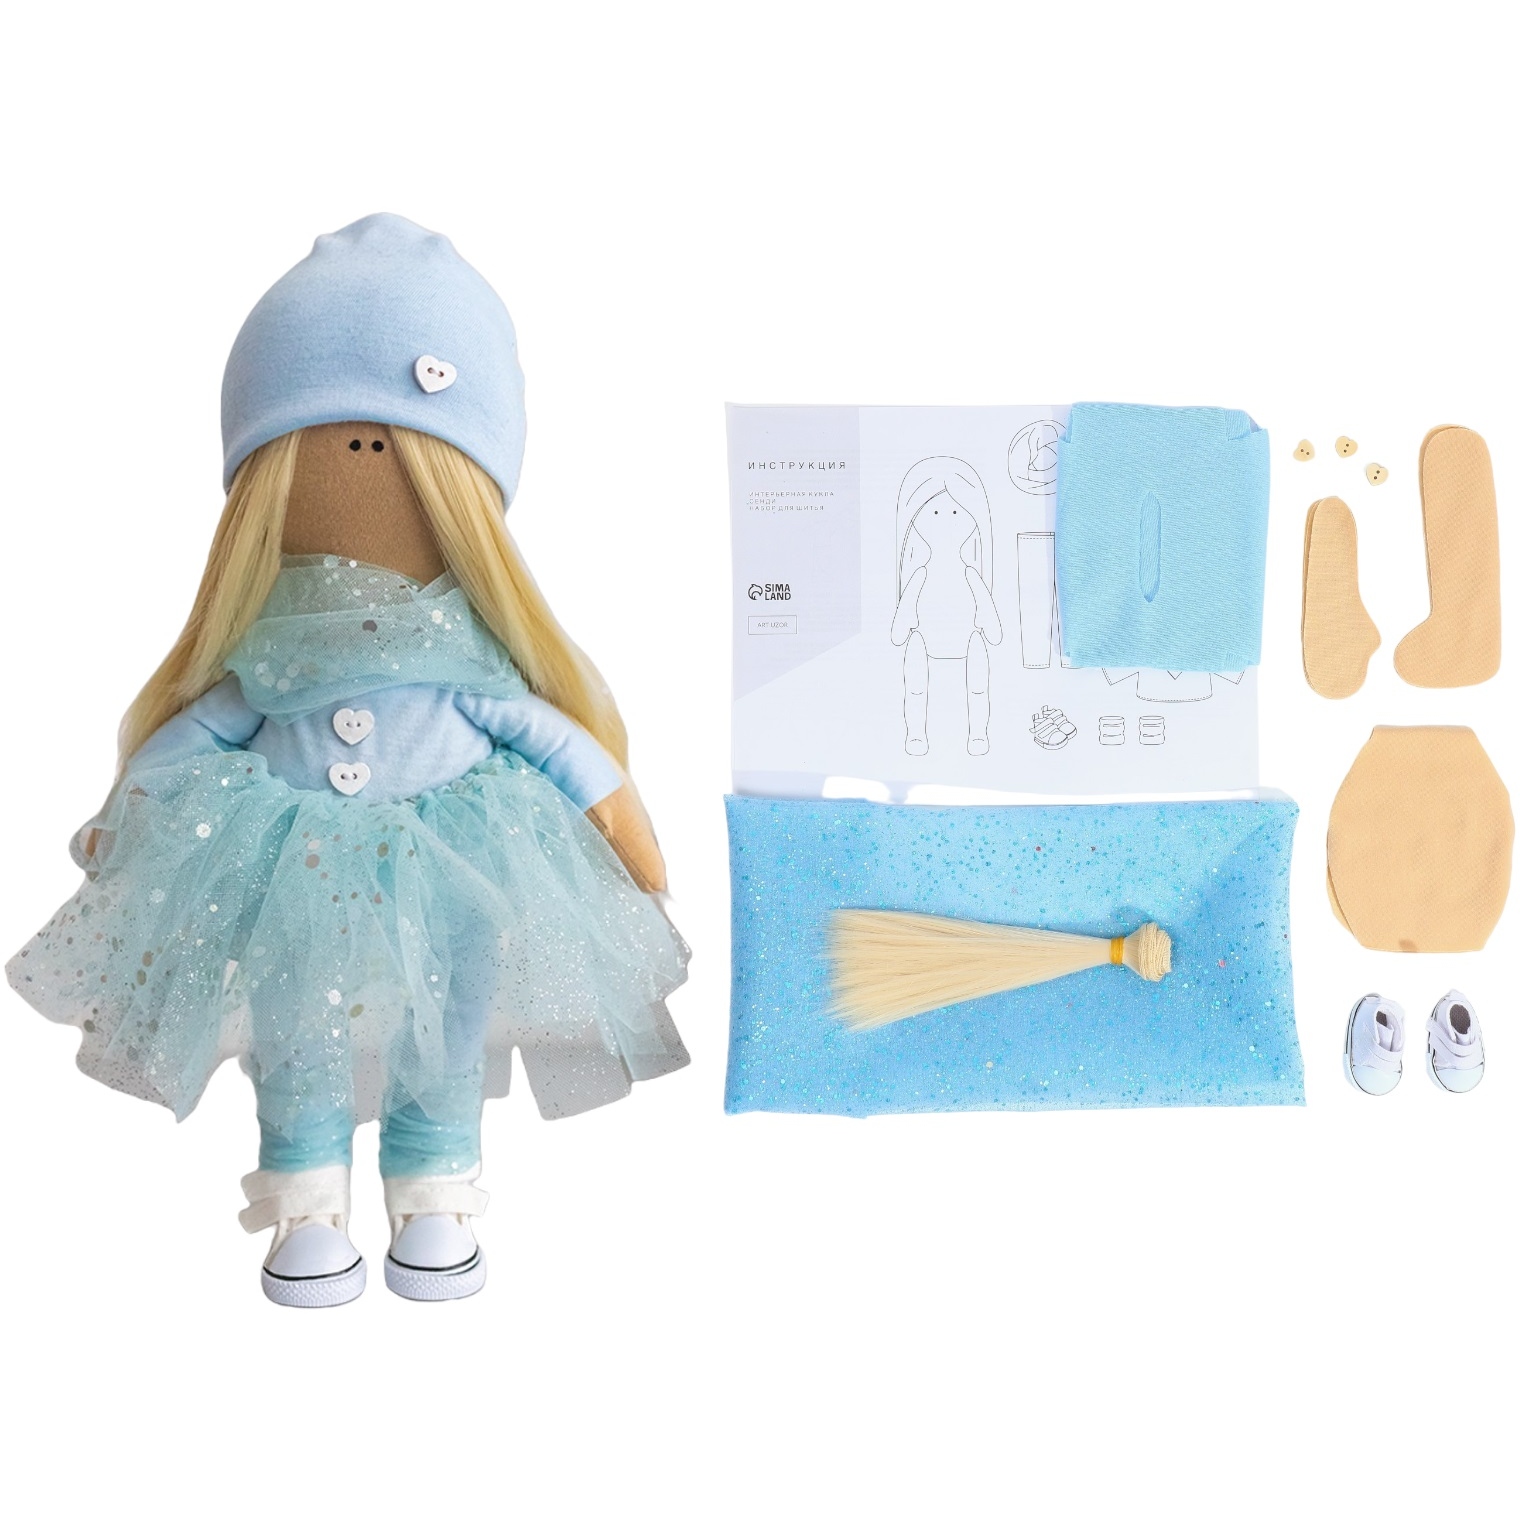 Интерьерная кукла "Сенди" (набор для шитья, 15.6х22.4х5.2 см)